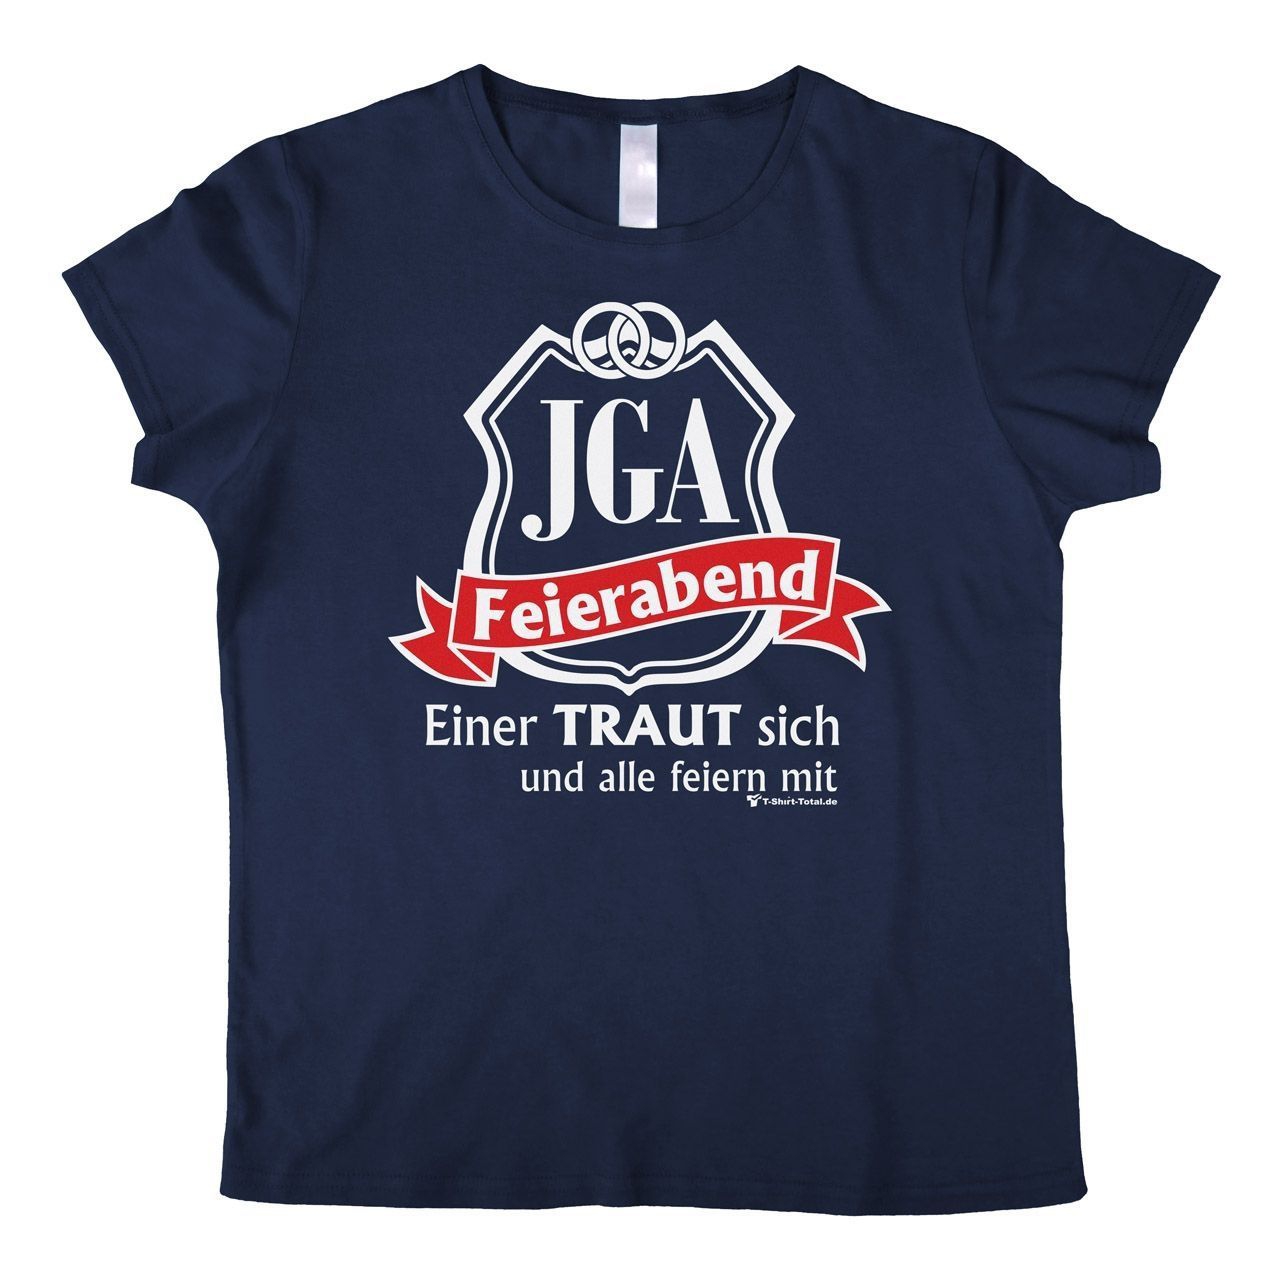 JGA Feierabend Woman T-Shirt navy Small